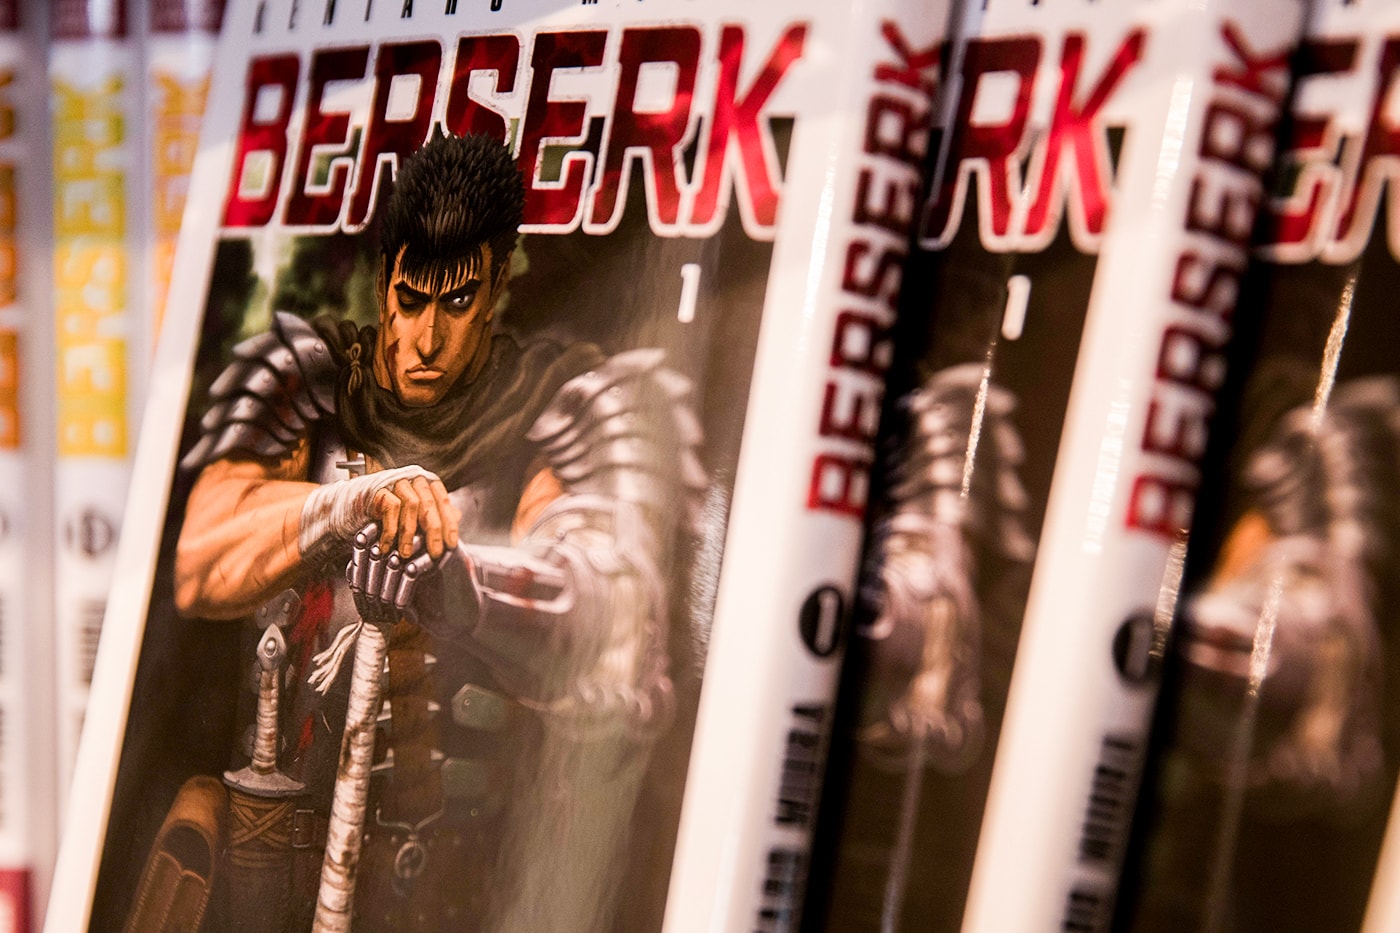 Last Volume Of 'Berserk' Manga To Be Published This November